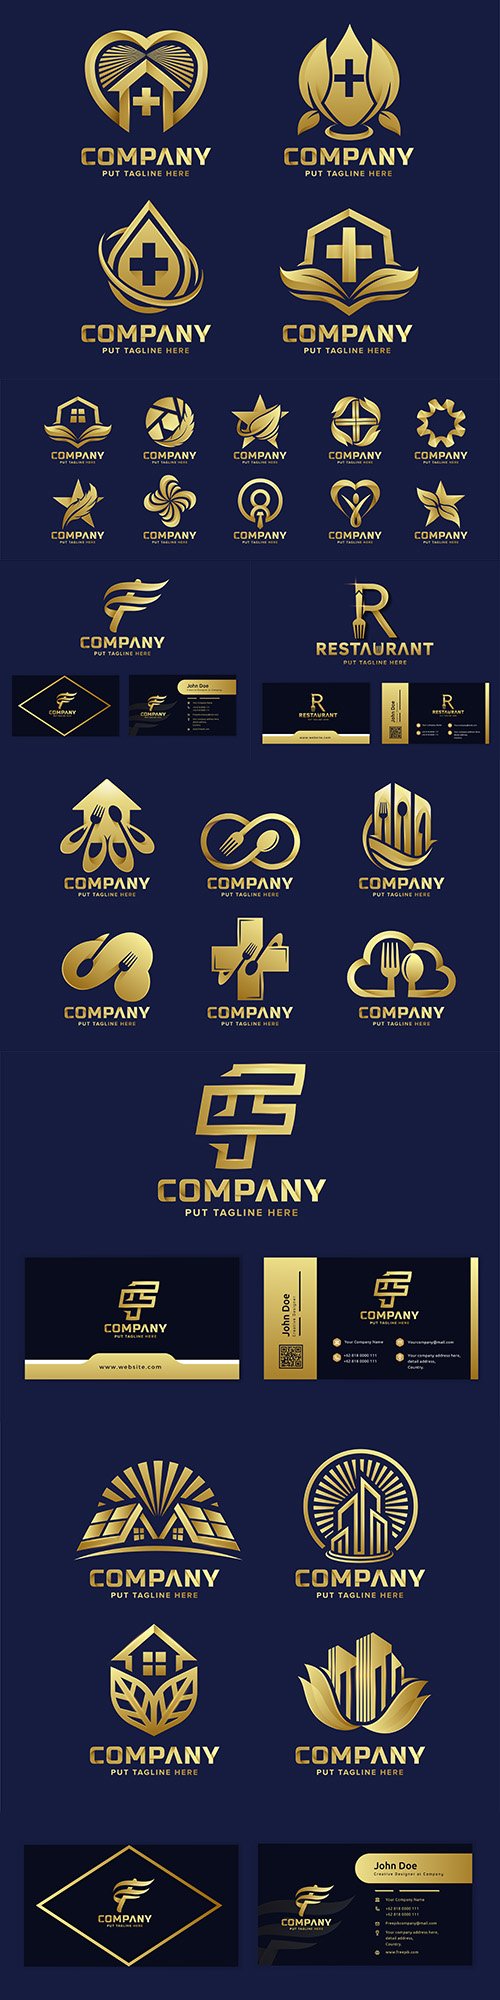 Creative business logos corporate company design 39